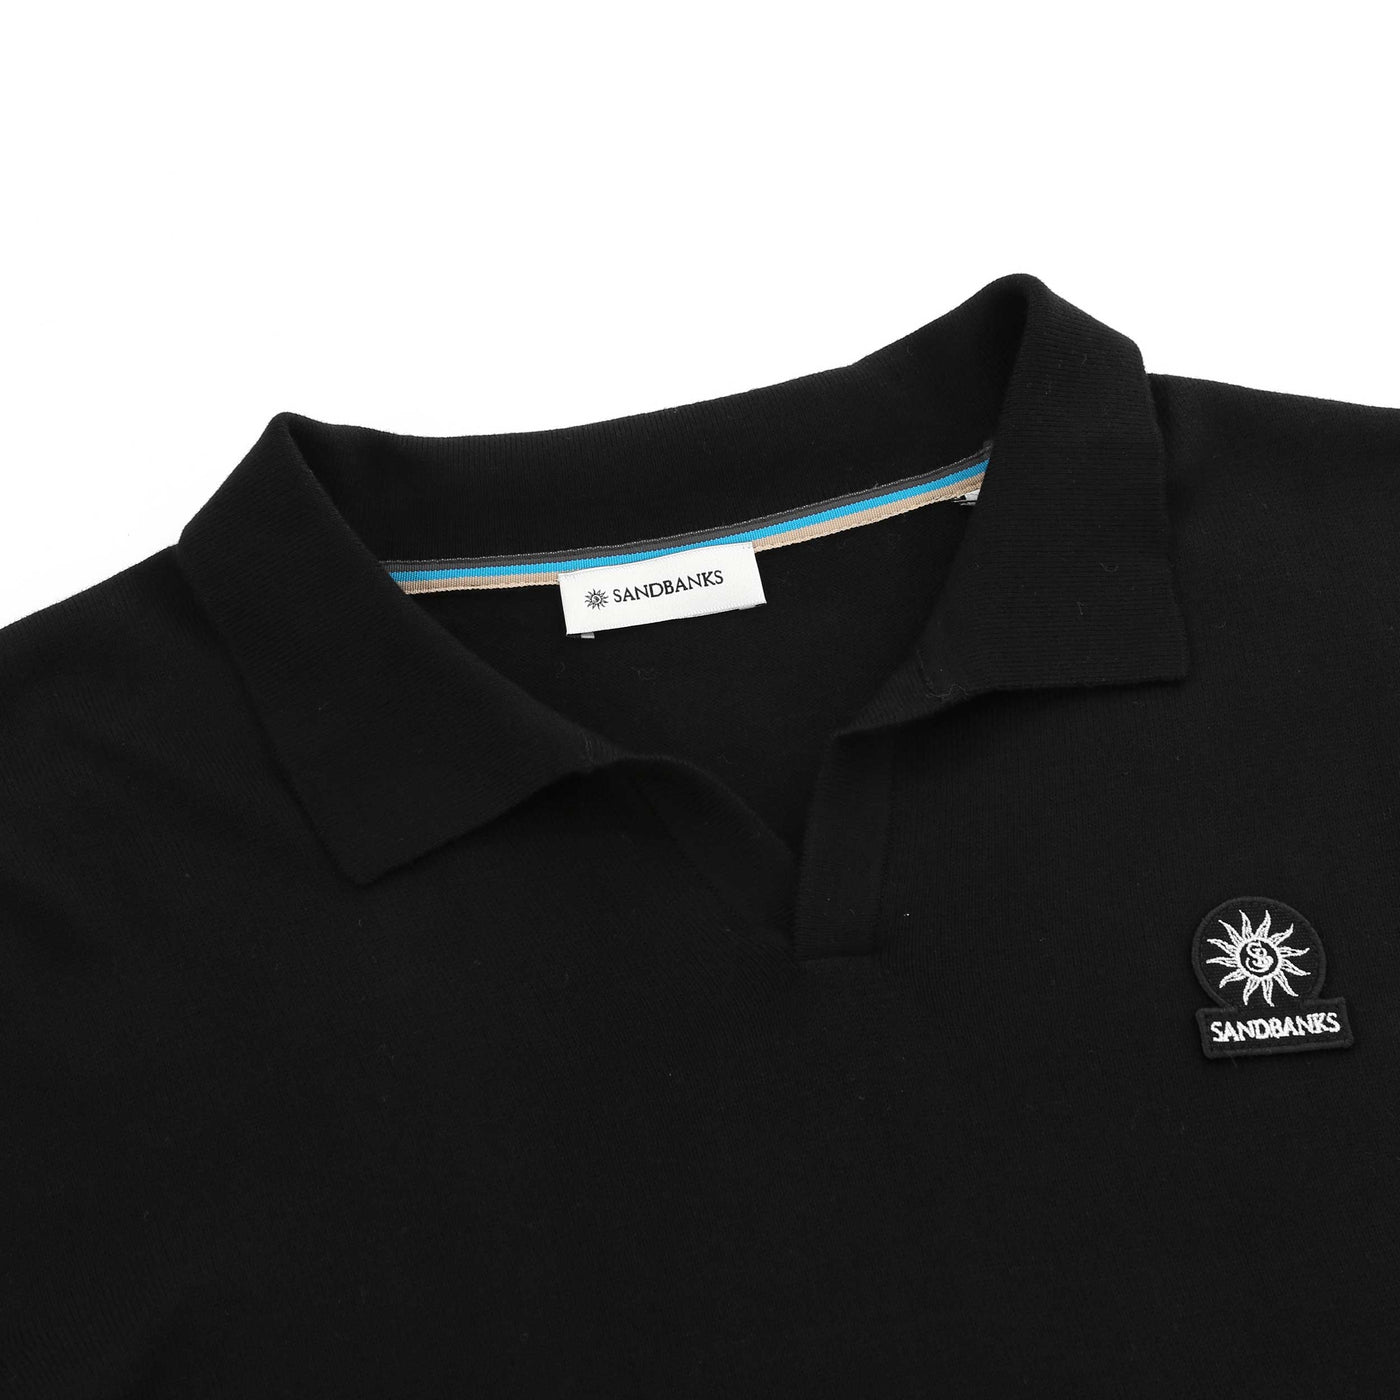 Sandbanks Knitted Open Collar Polo Shirt in Black Placket